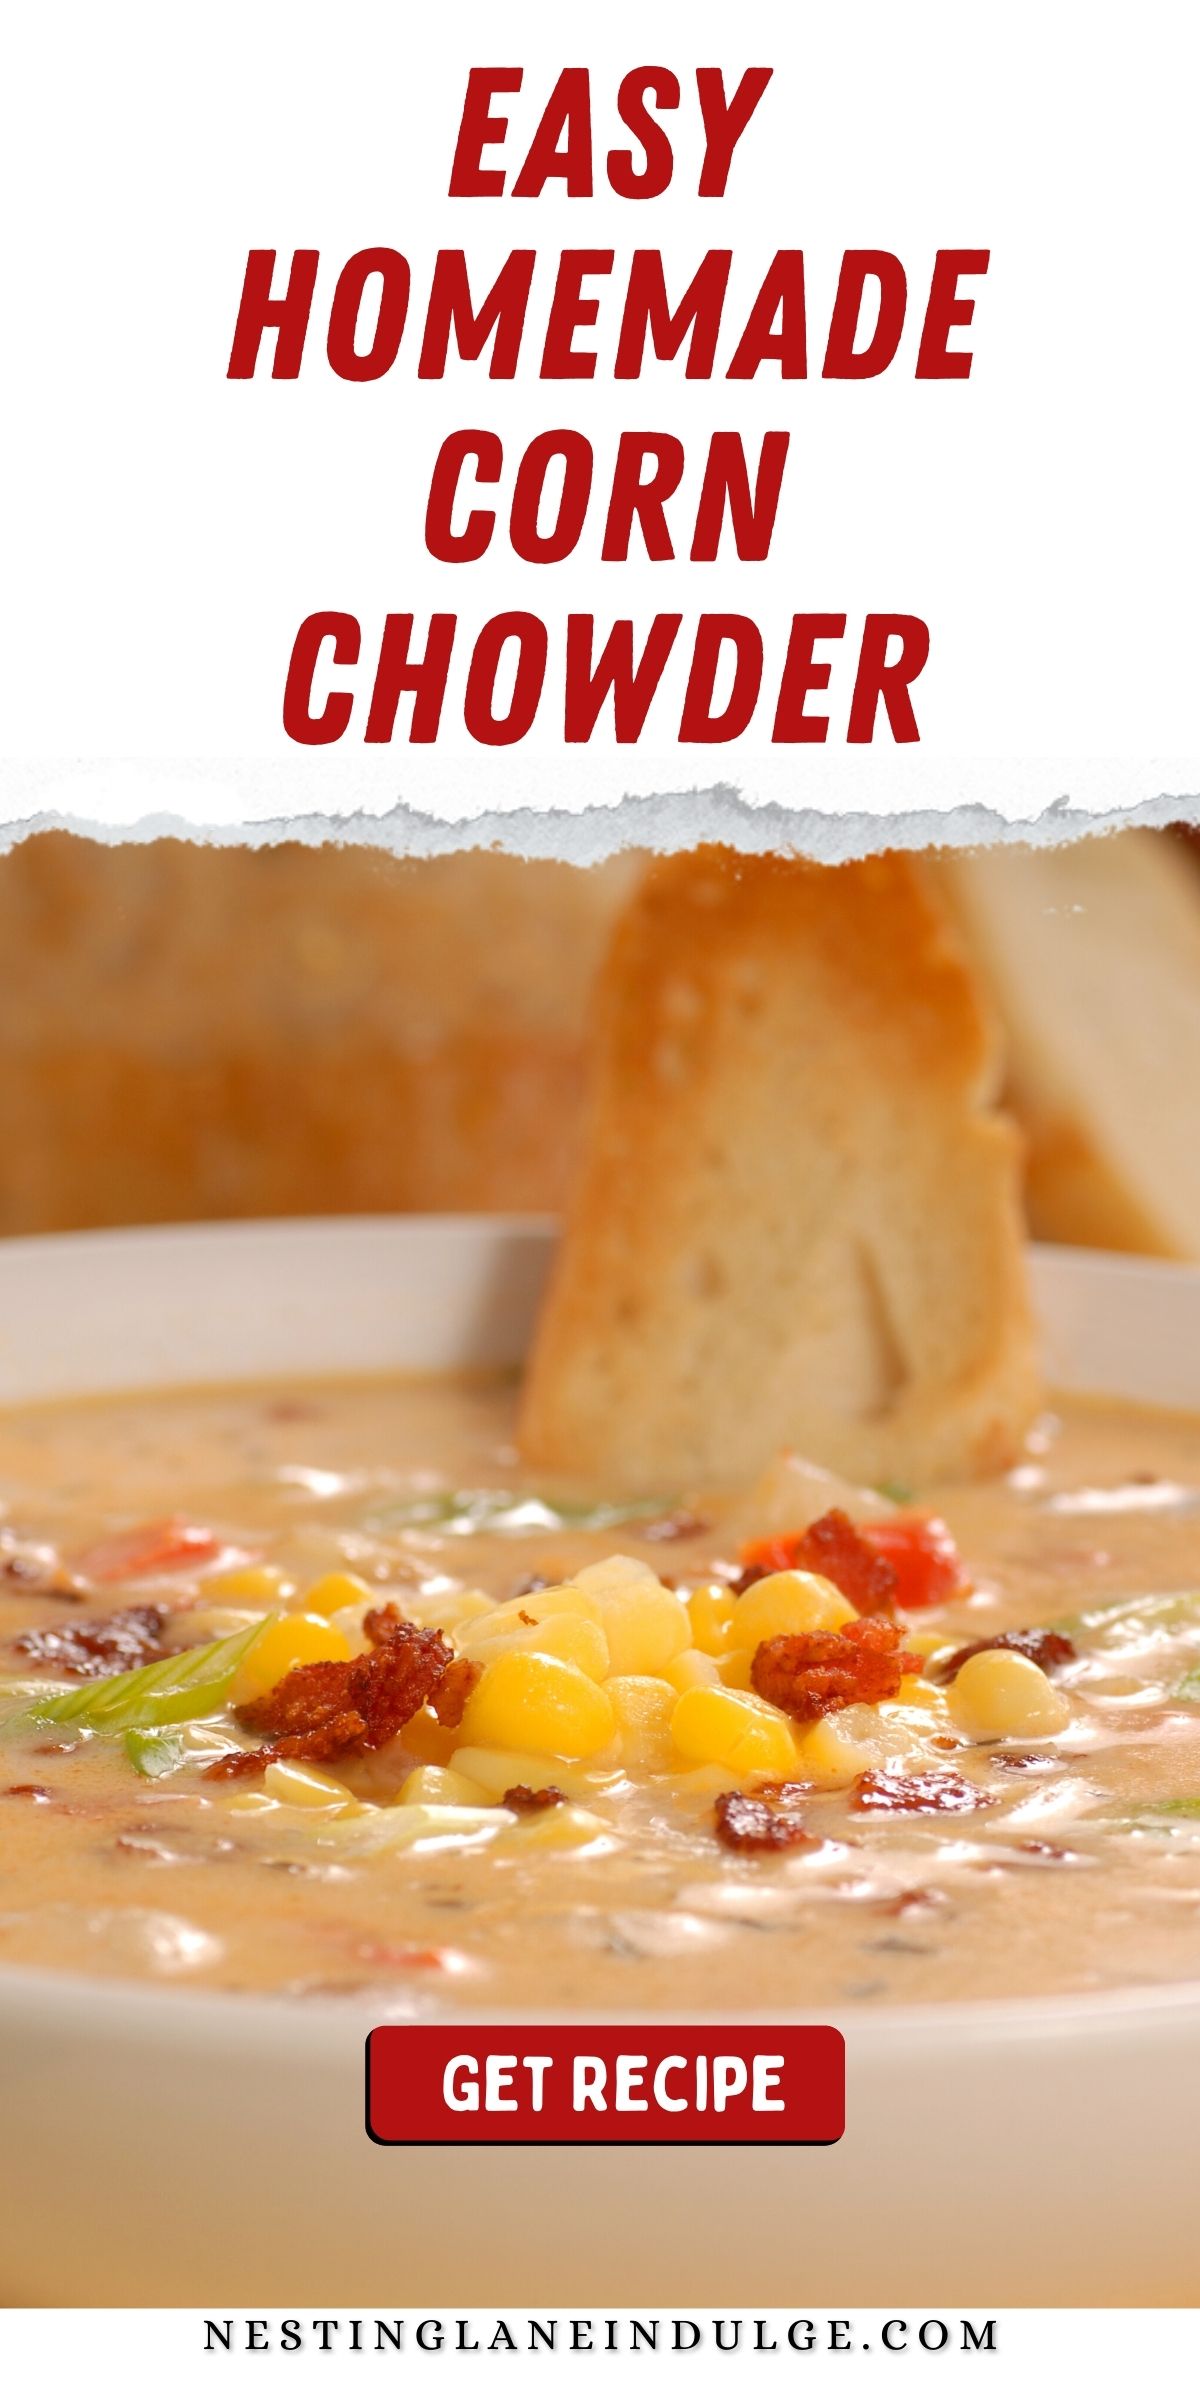 Easy Homemade Corn Chowder Graphic